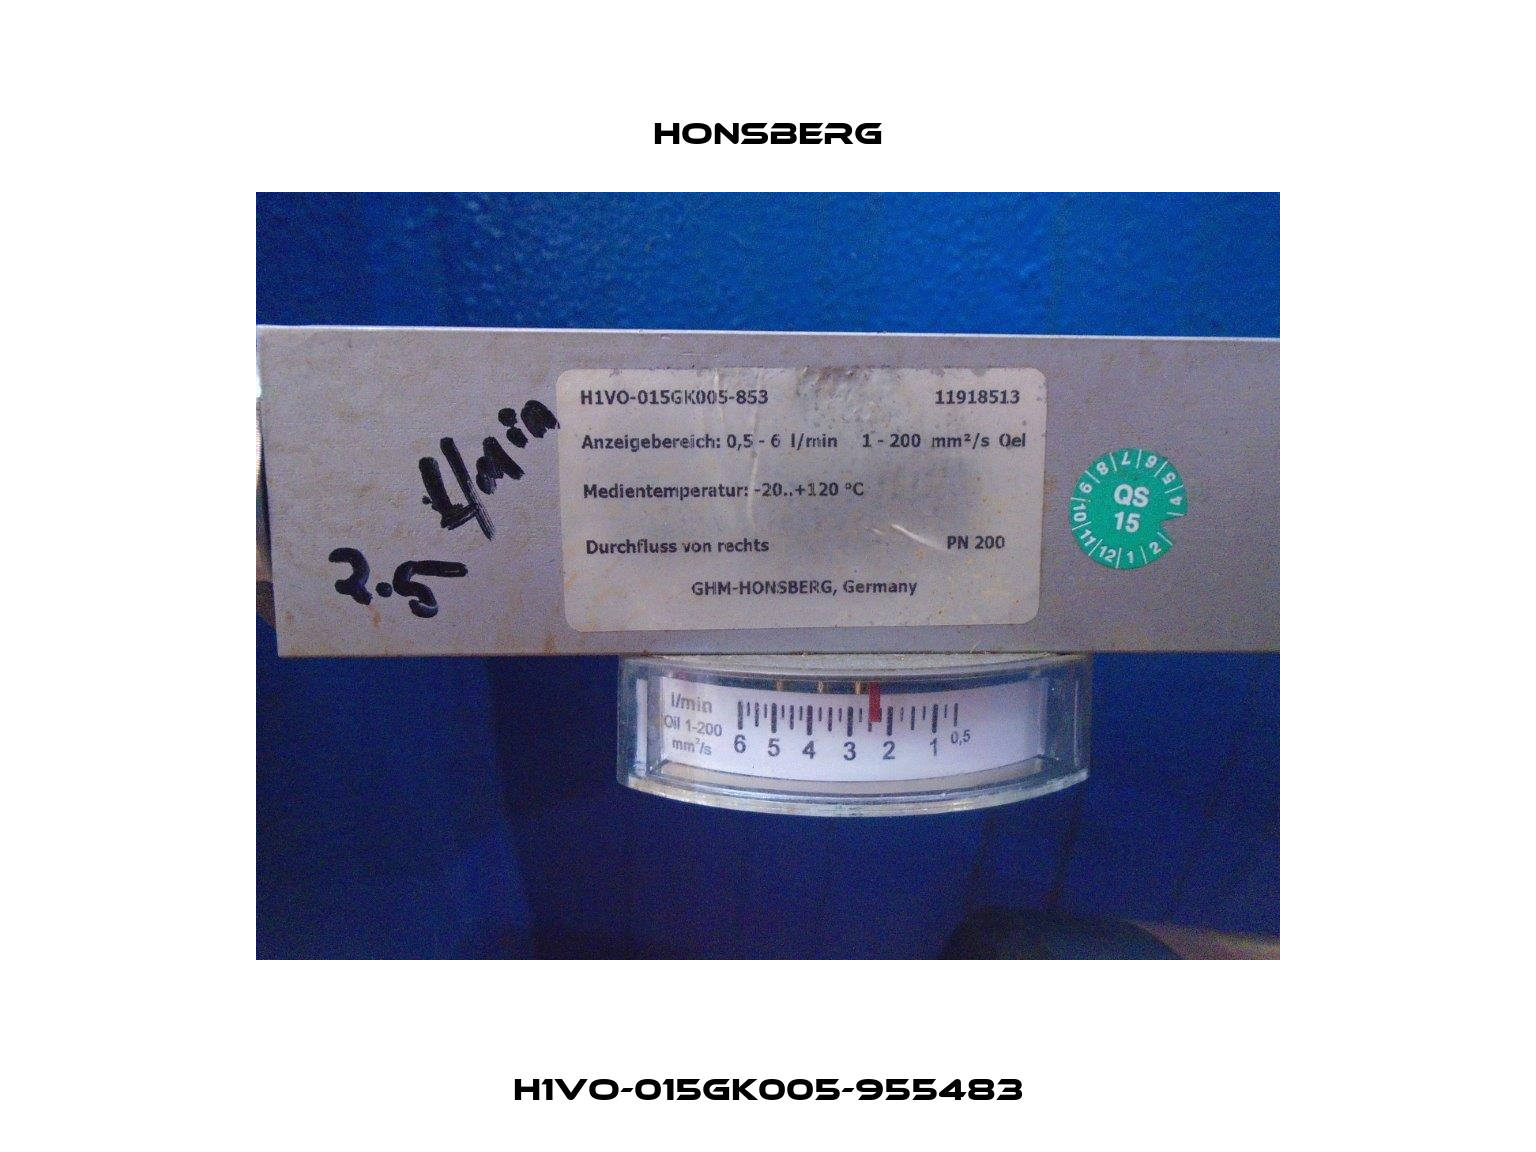 H1VO-015GK005-955483 Honsberg